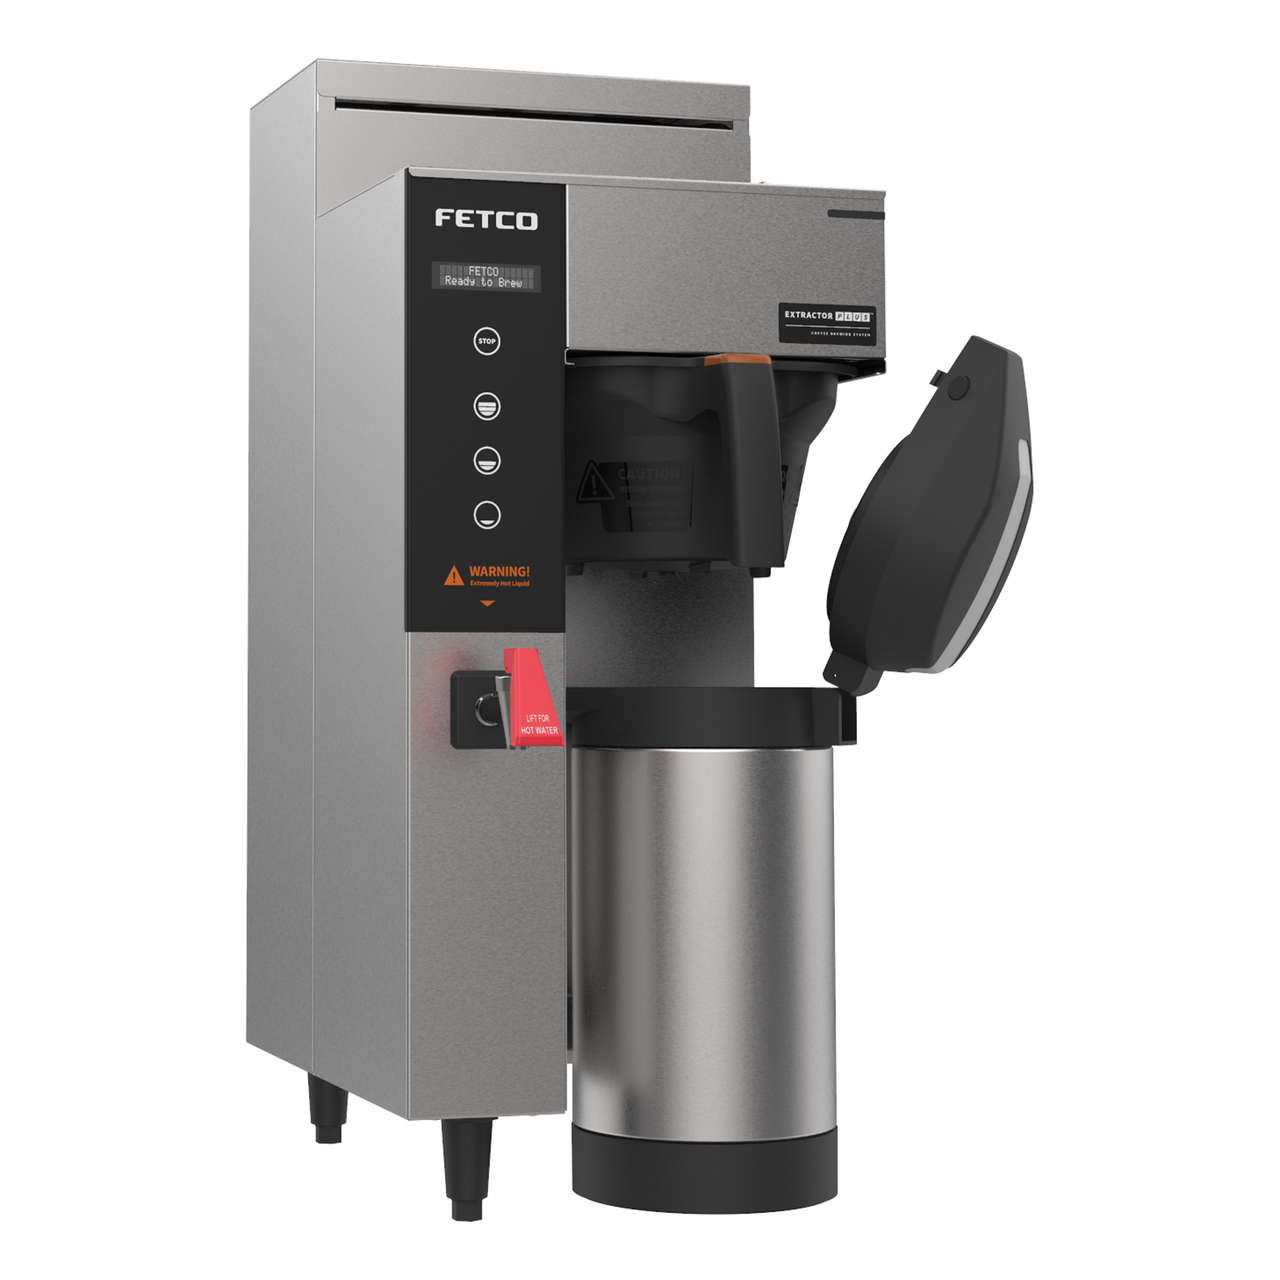 Fetco CBS-1231 Plus 3.0 - 4.0 Liter Coffee Brewer – Dual Voltage